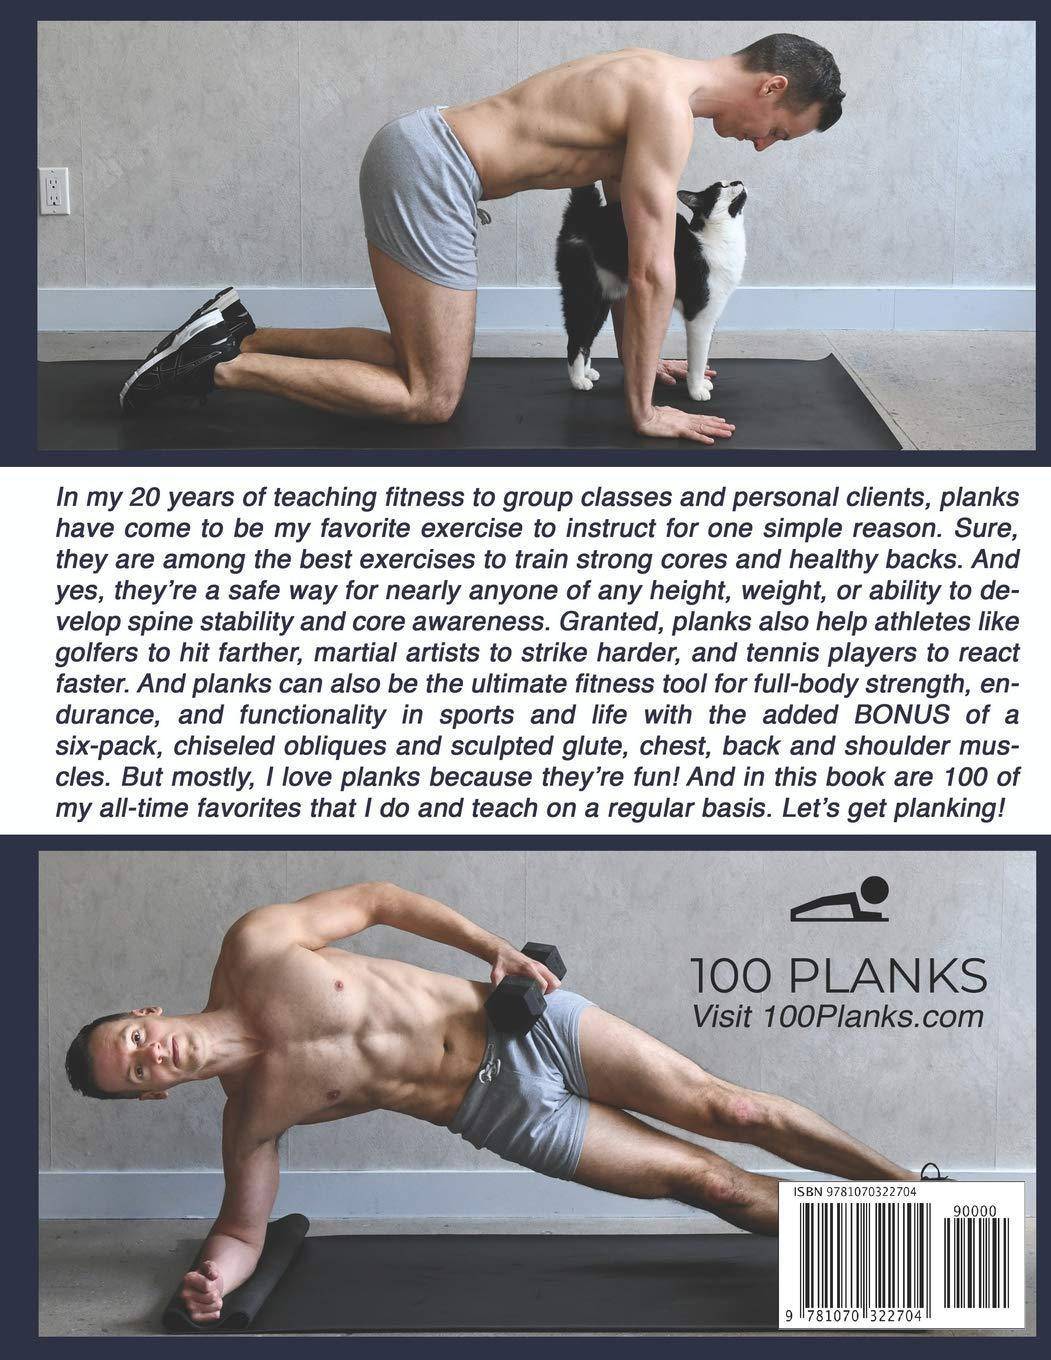 100 Planks: The Plank Encyclopedia for Back Health, Bodyweight T - SureShot Books Publishing LLC